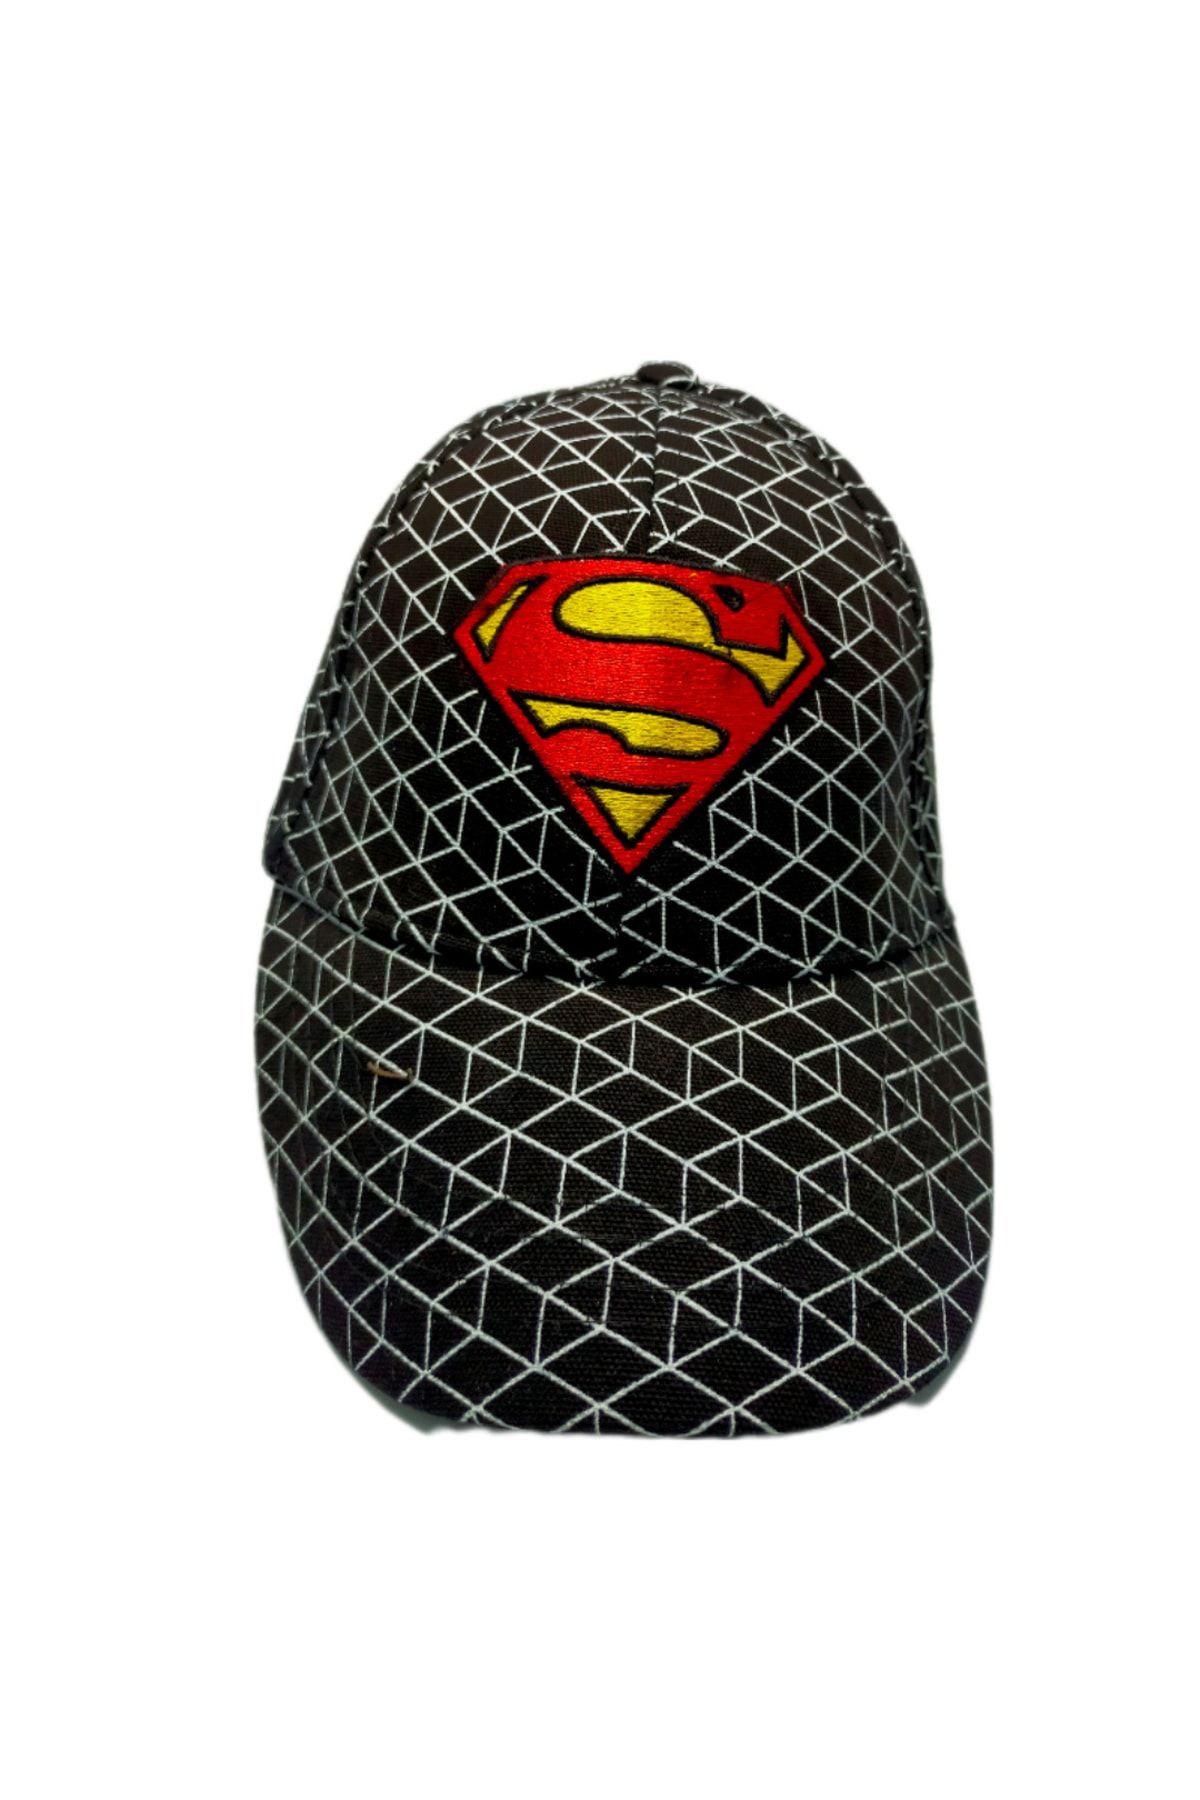 sockscdcofficial Karakterli Superman Şapka